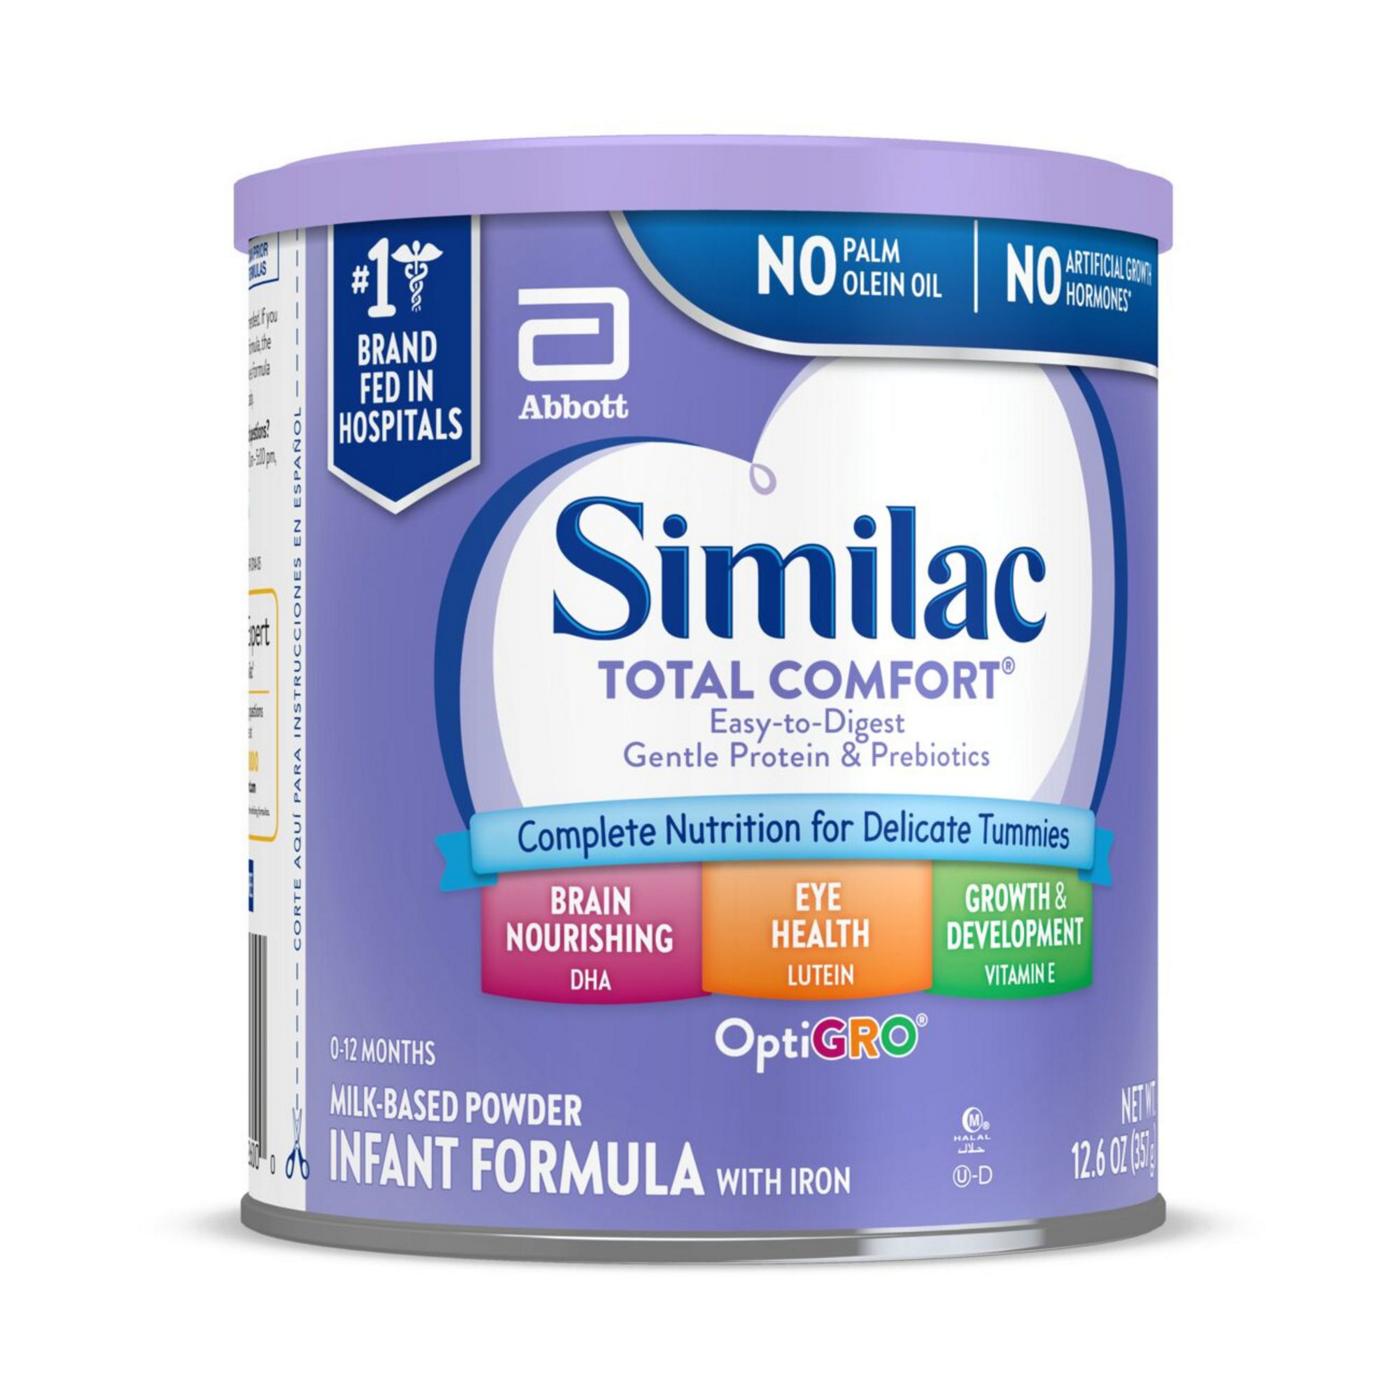 Similac Total Comfort Milk-Based Powder Infant Formula with Iron; image 3 of 10